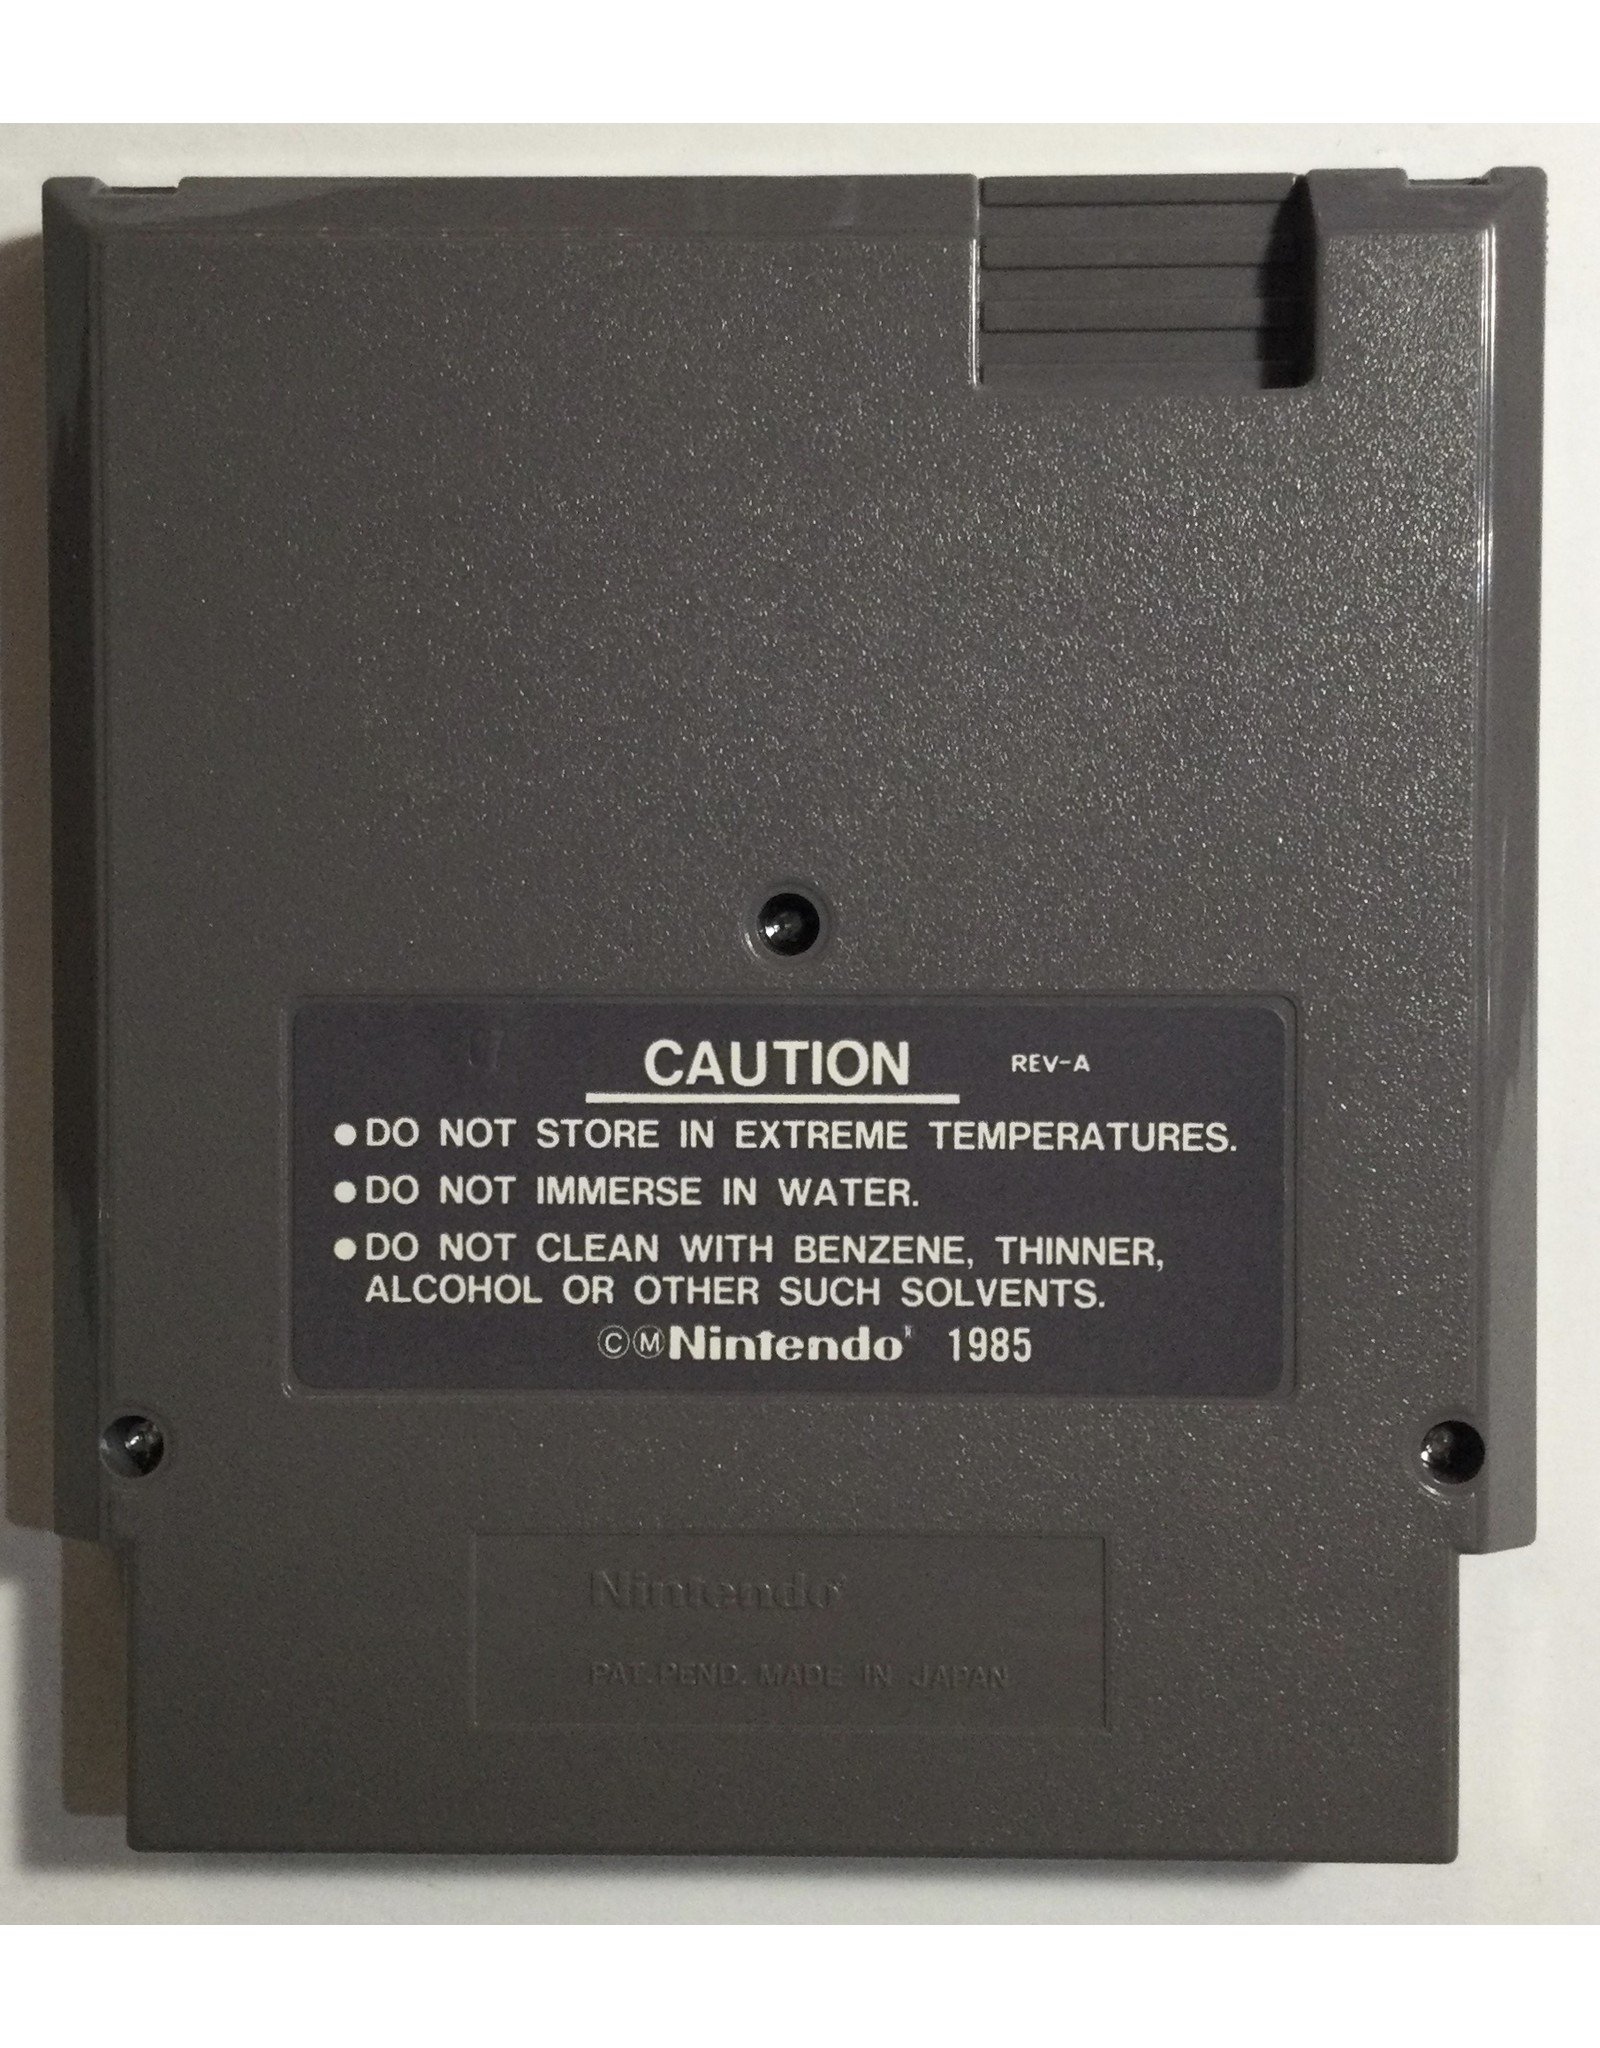 LJN The Punisher for Nintendo Entertainment System (NES)